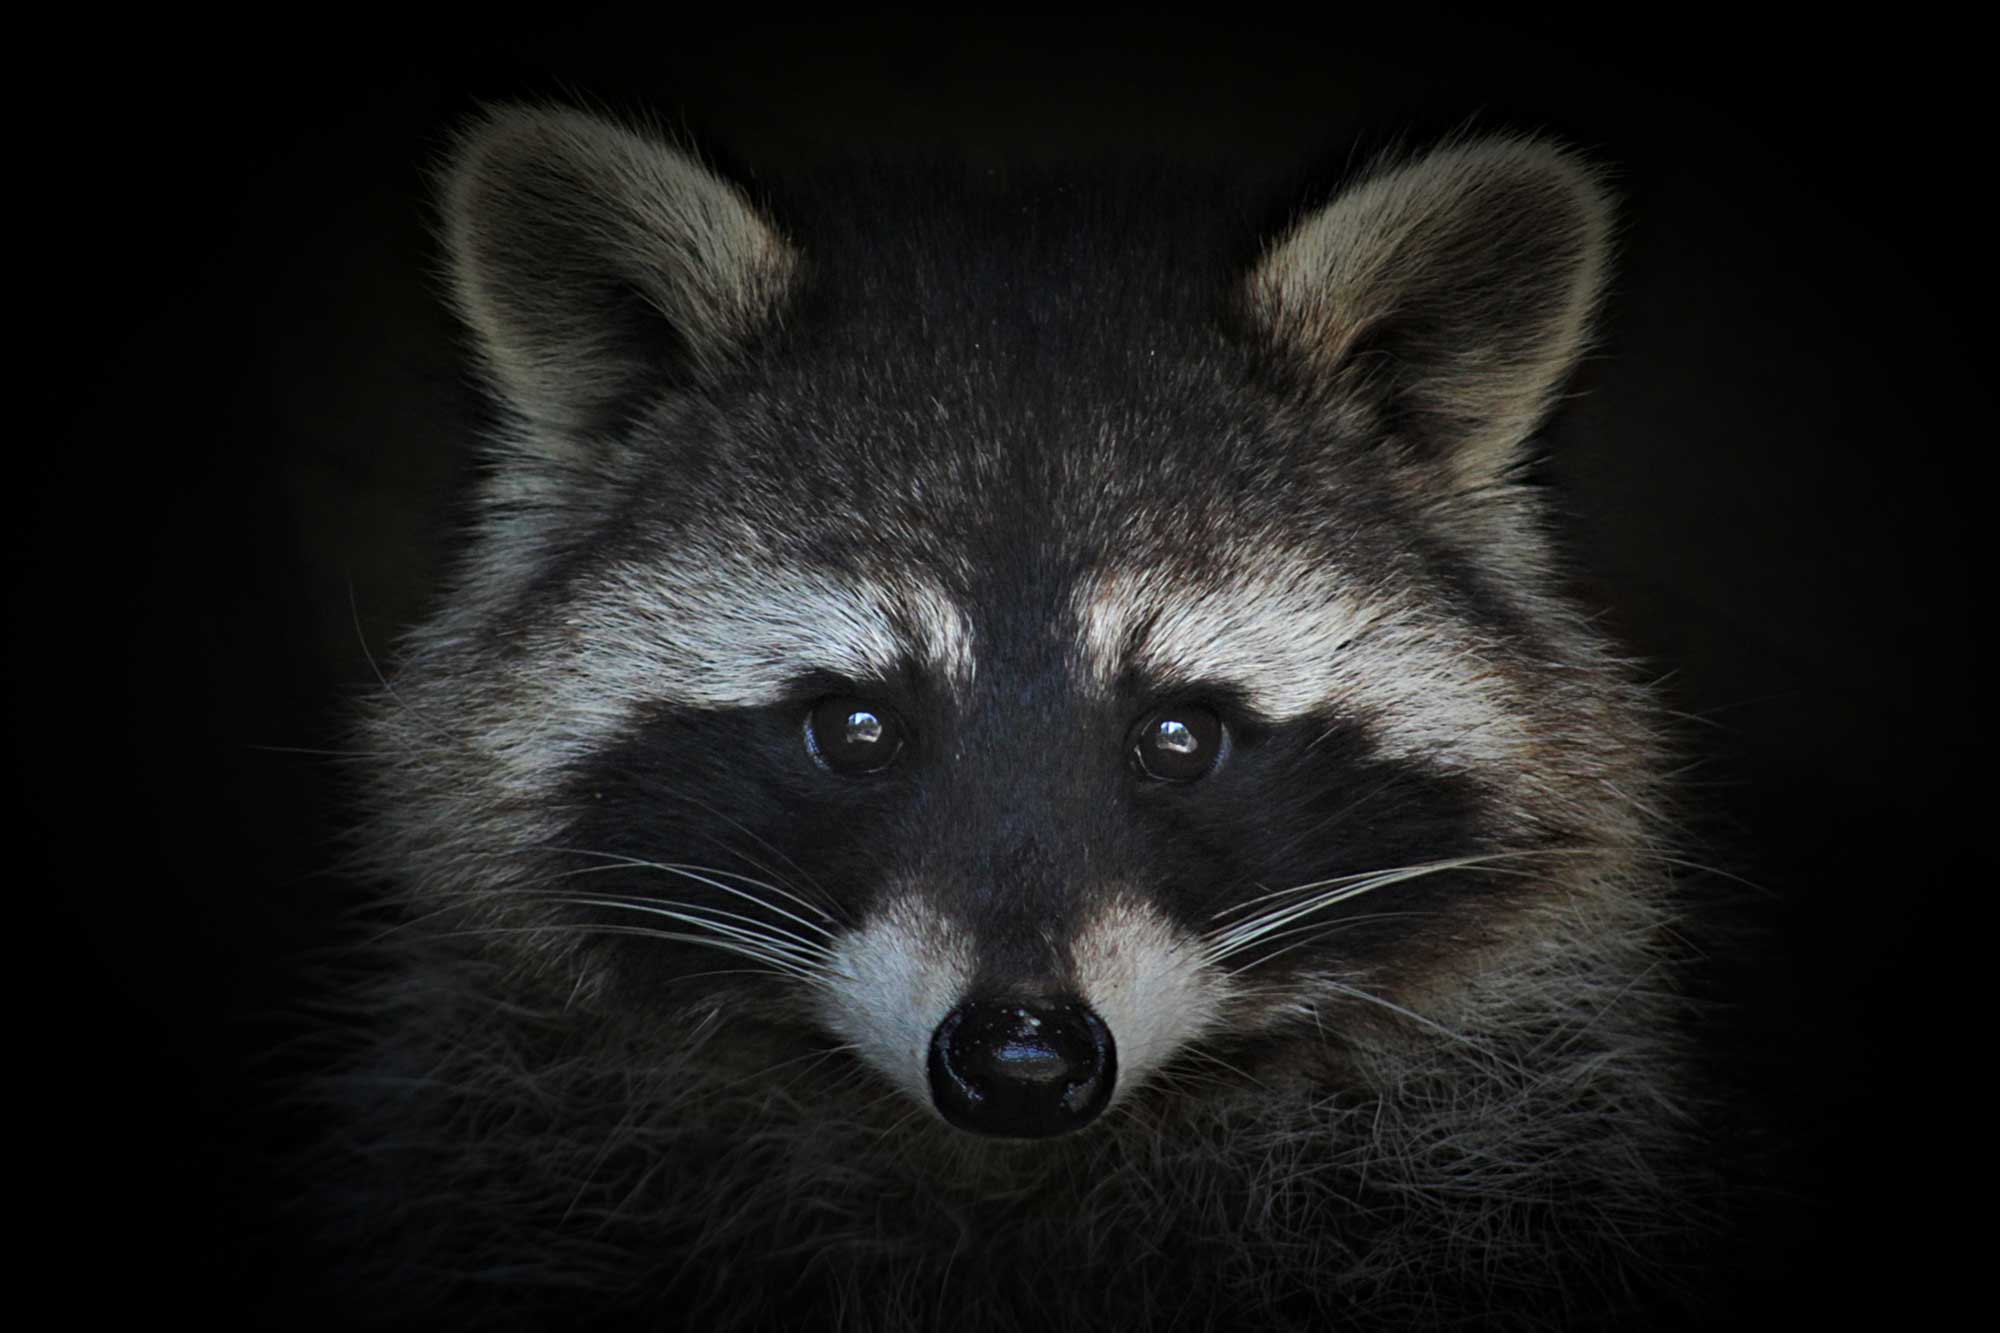 A closeup view of a raccoon's face